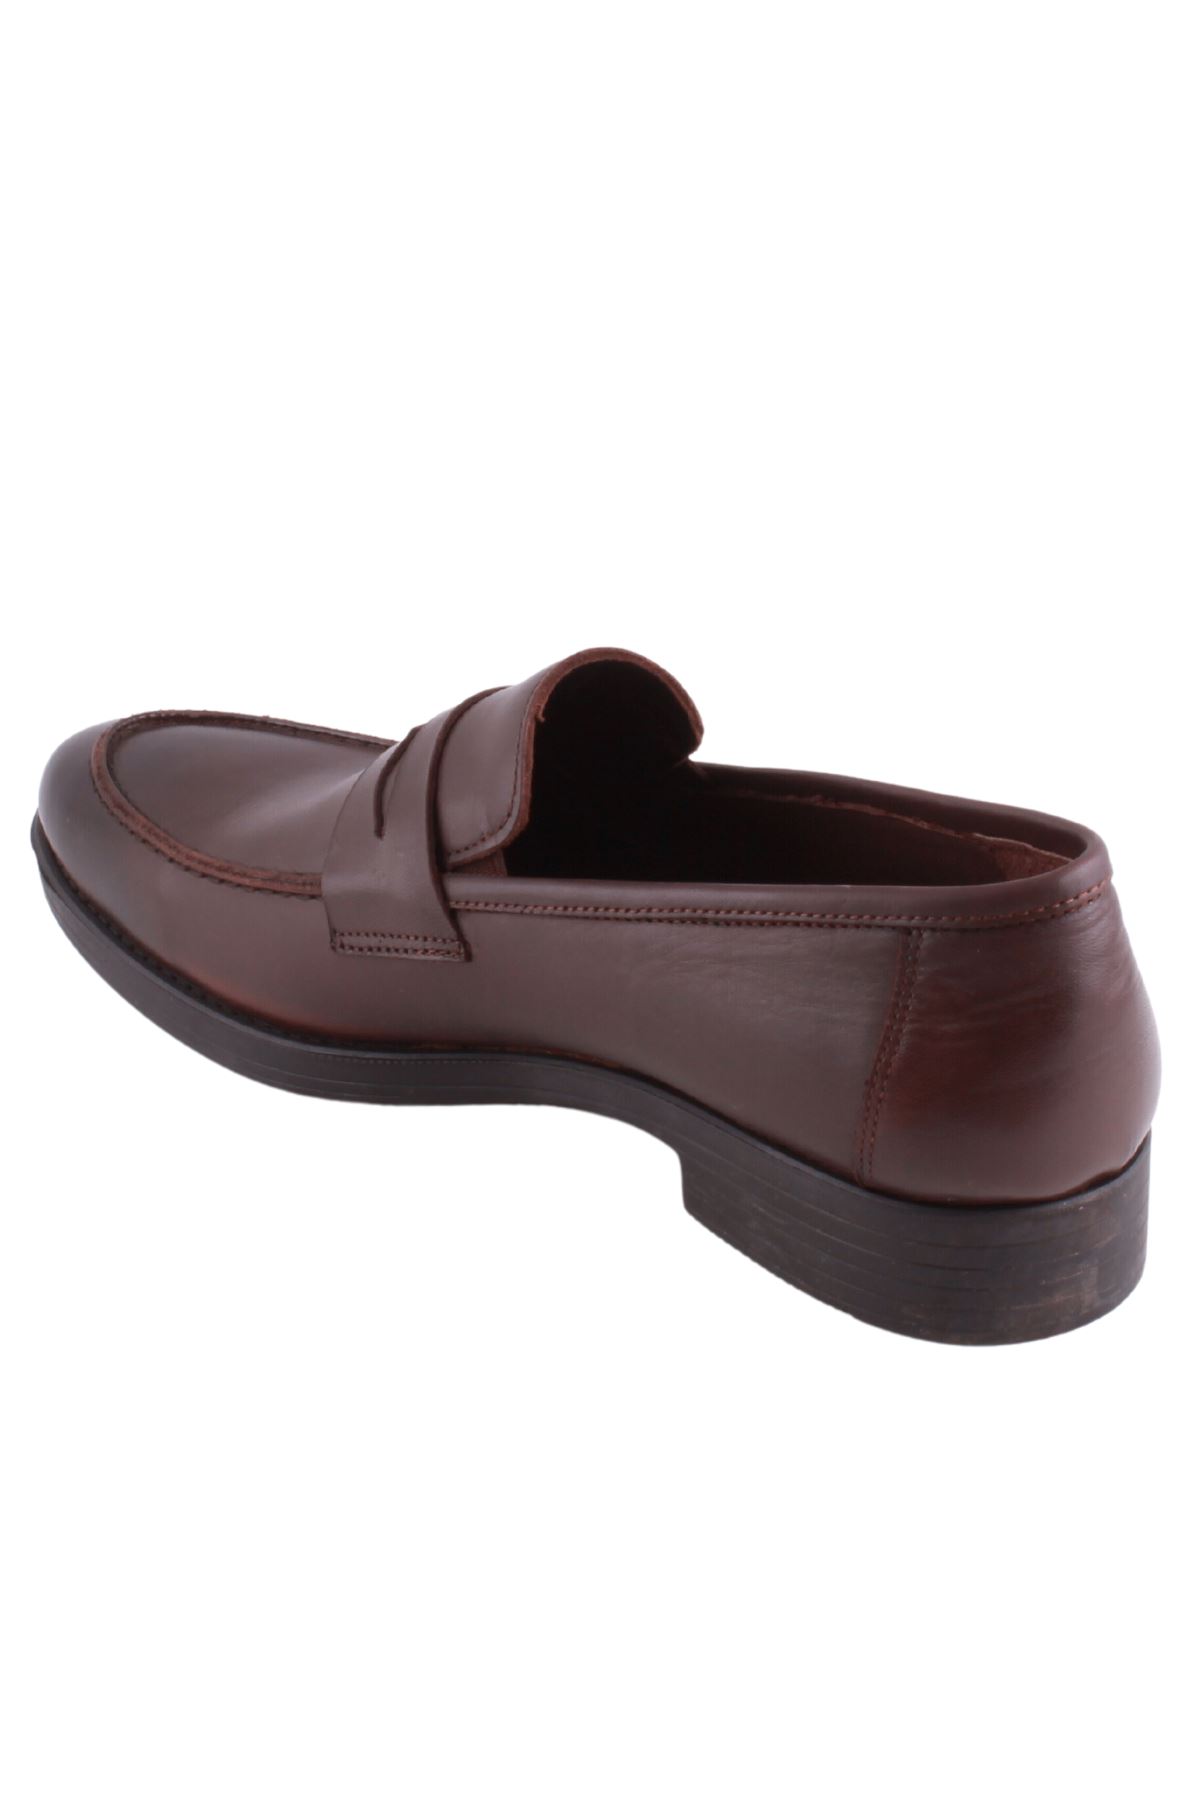 Giyinsen Erkek Kahverengi Günlük Ayakkabı - 24KH44000030